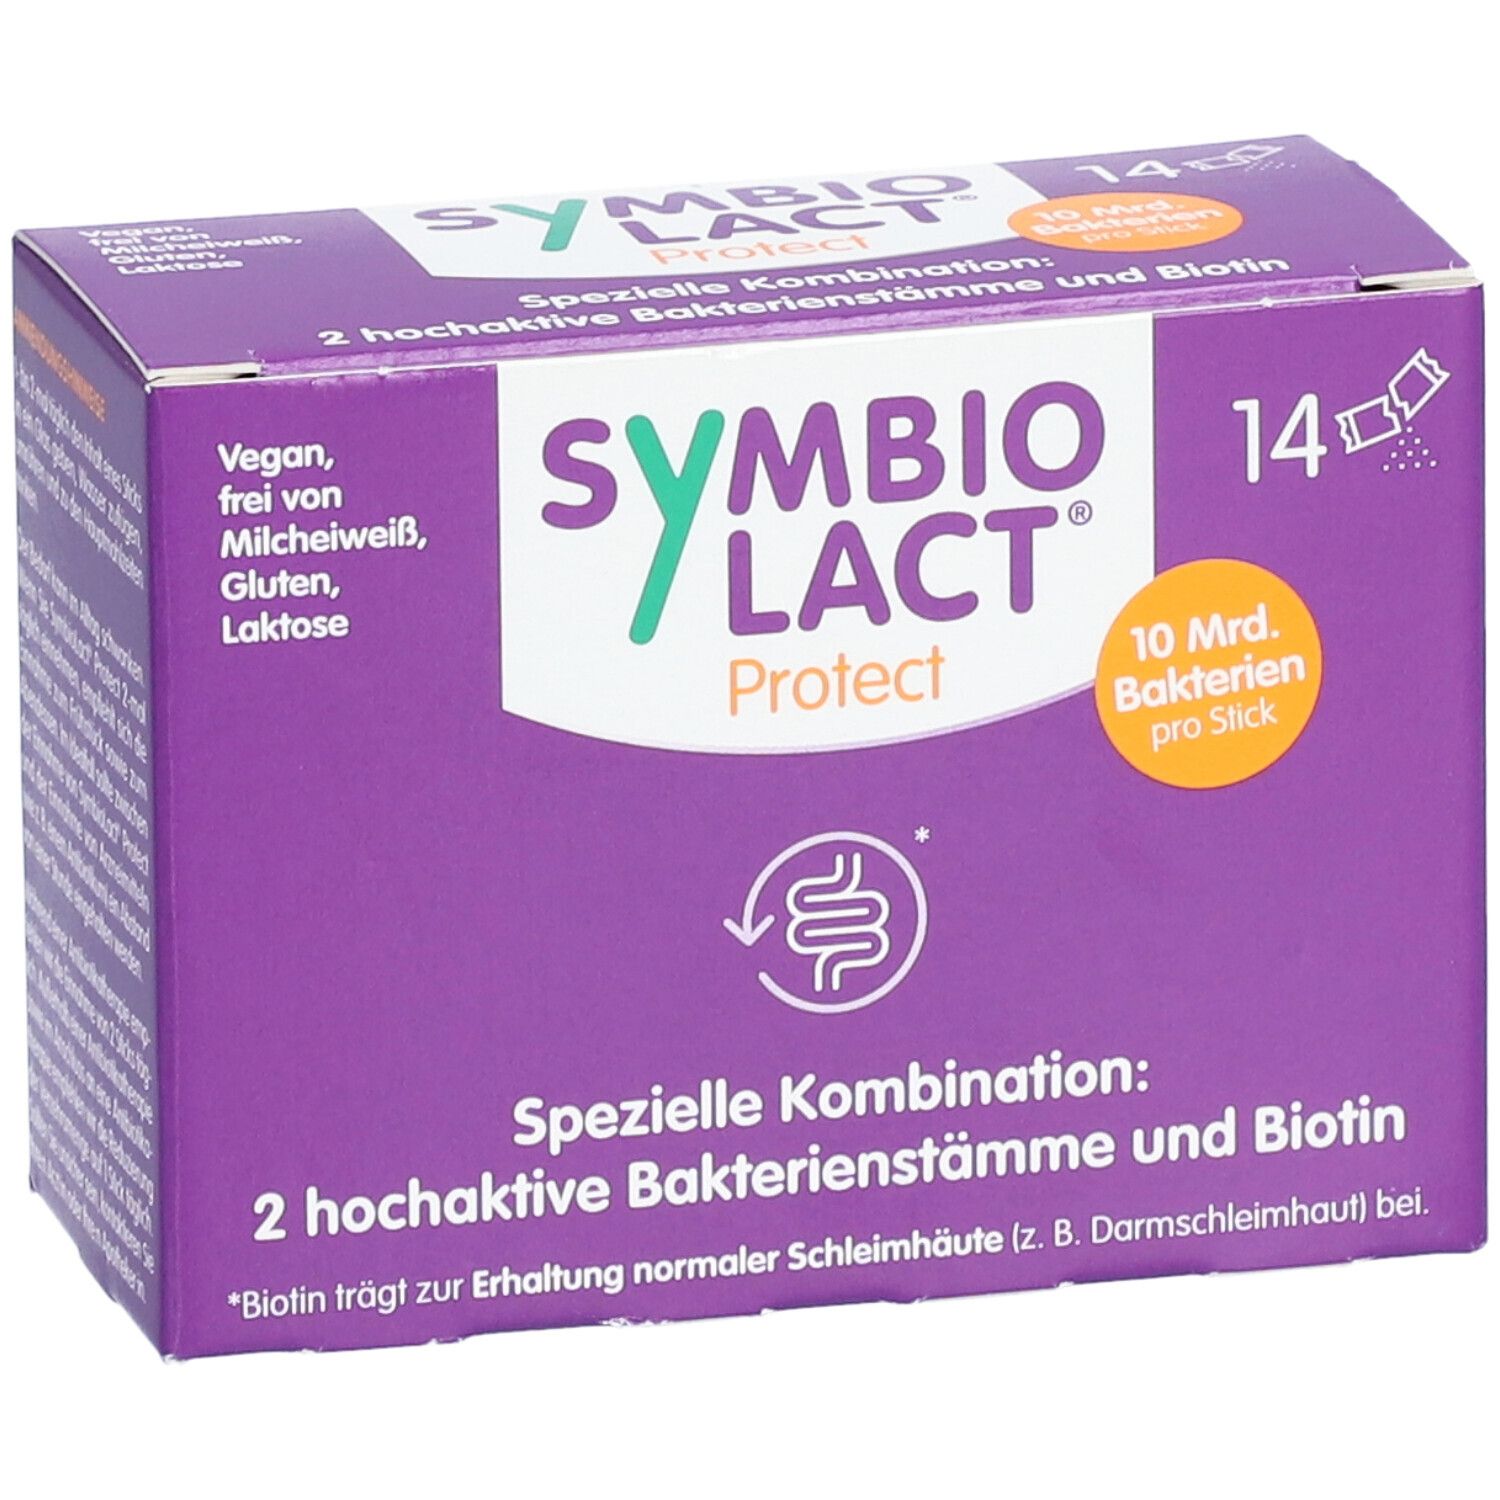 SymbioLact® Protect